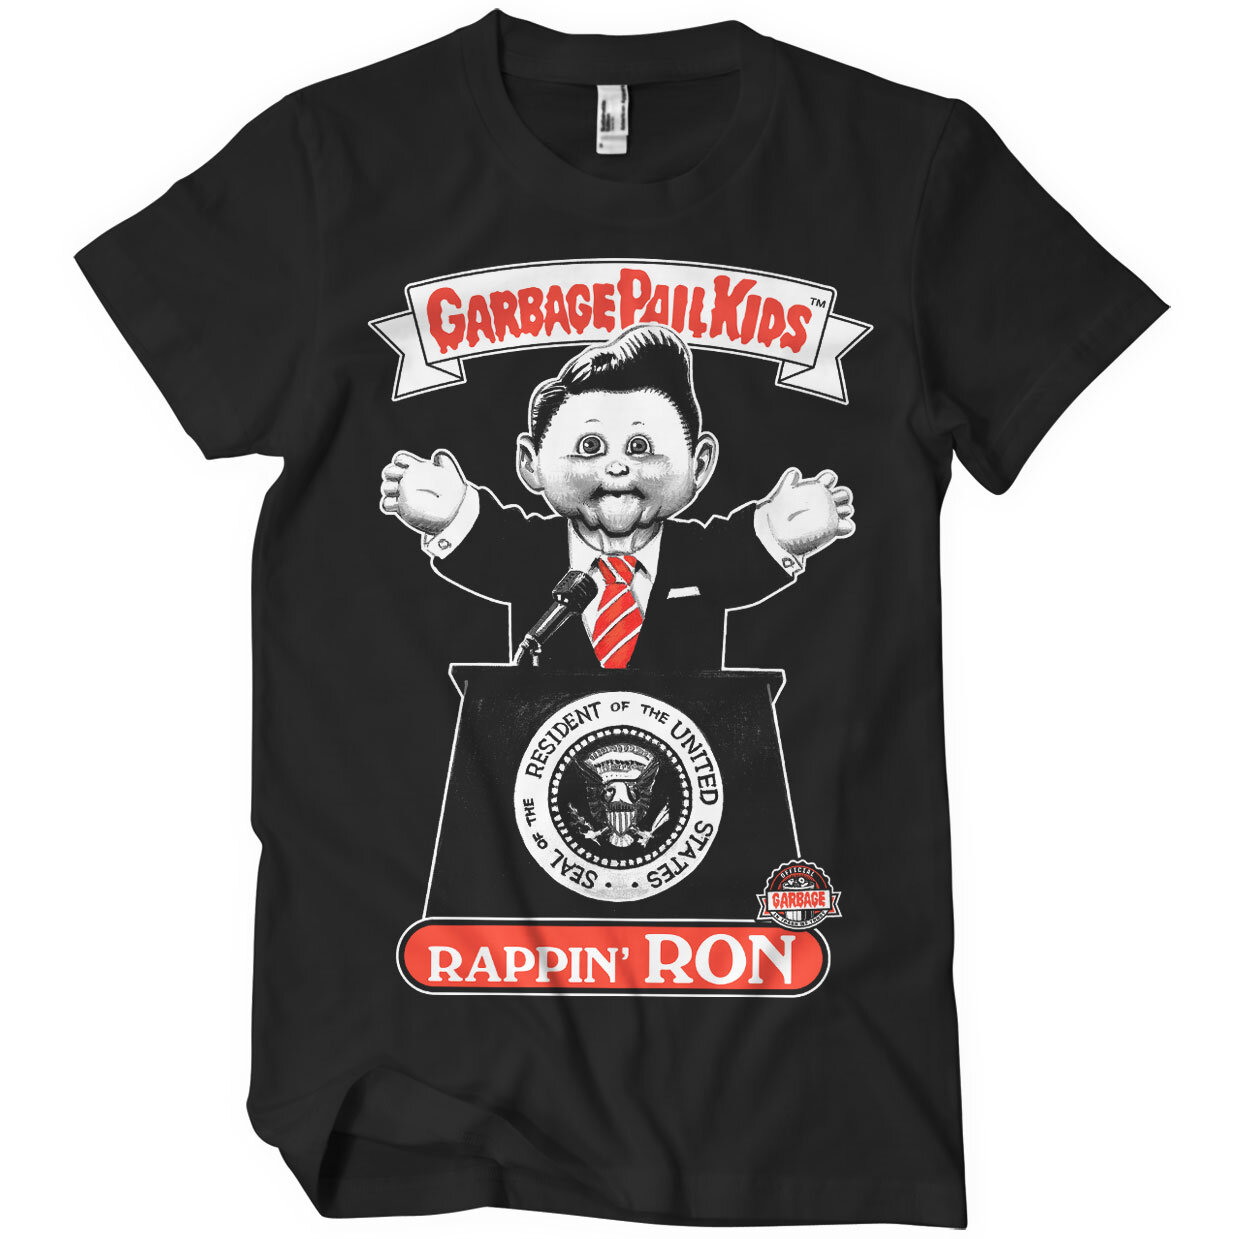 Rappin' Ron T-Shirt